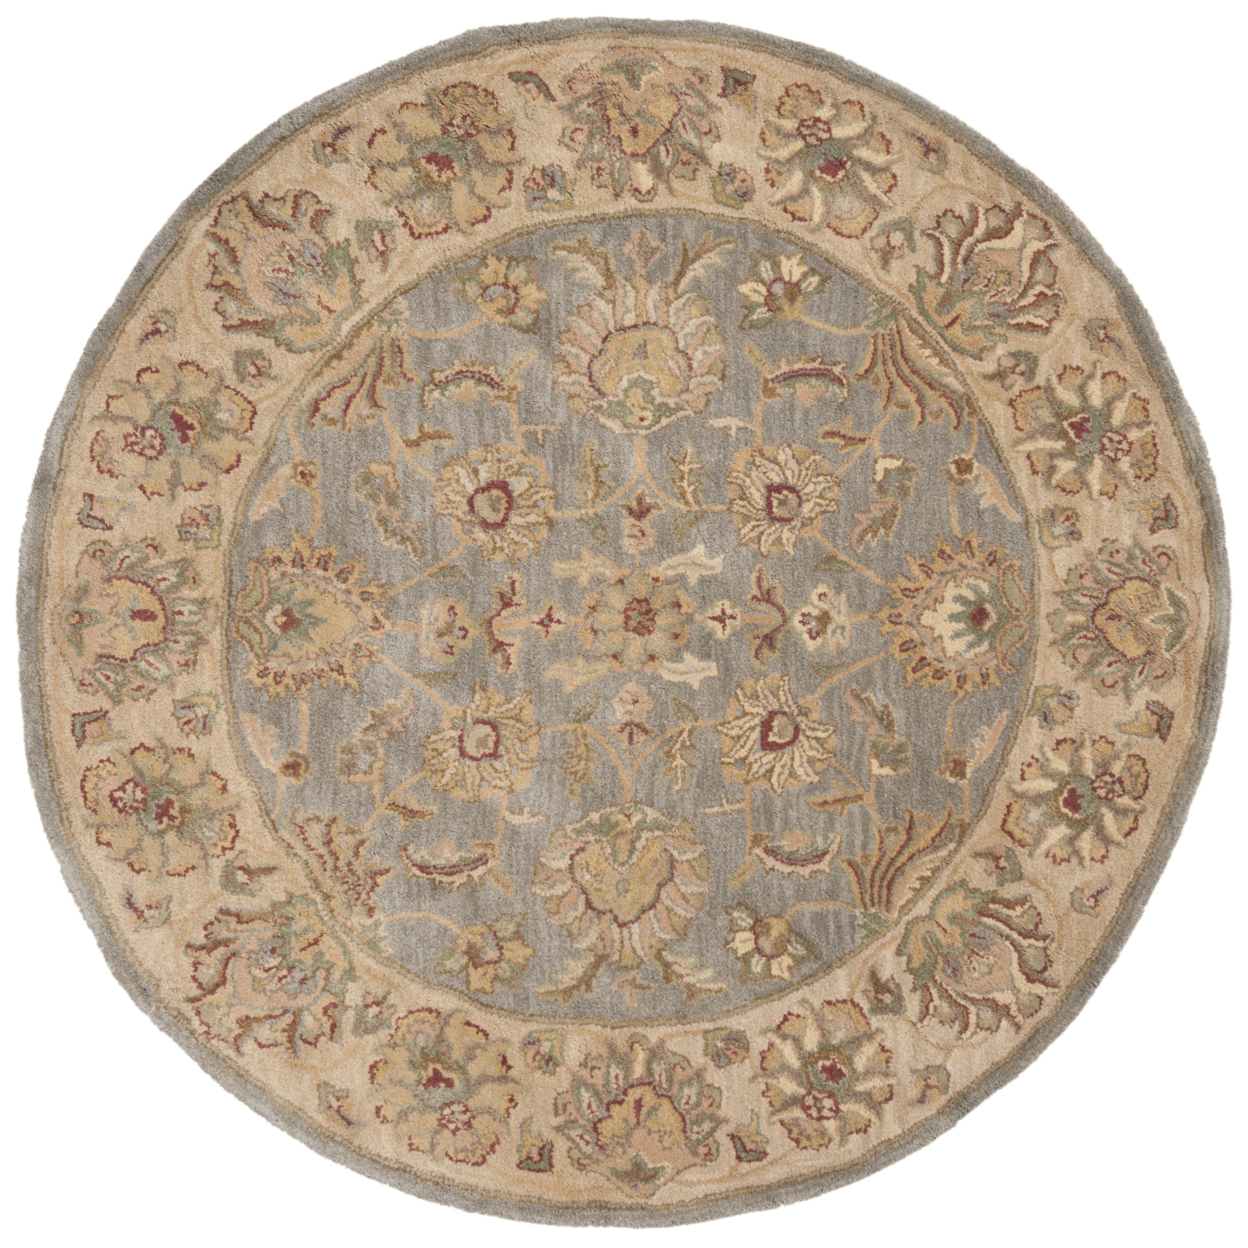 SAFAVIEH Heritage Regis Traditional Wool Area Rug, Blue/Beige, 6' x 6' Round - image 1 of 10